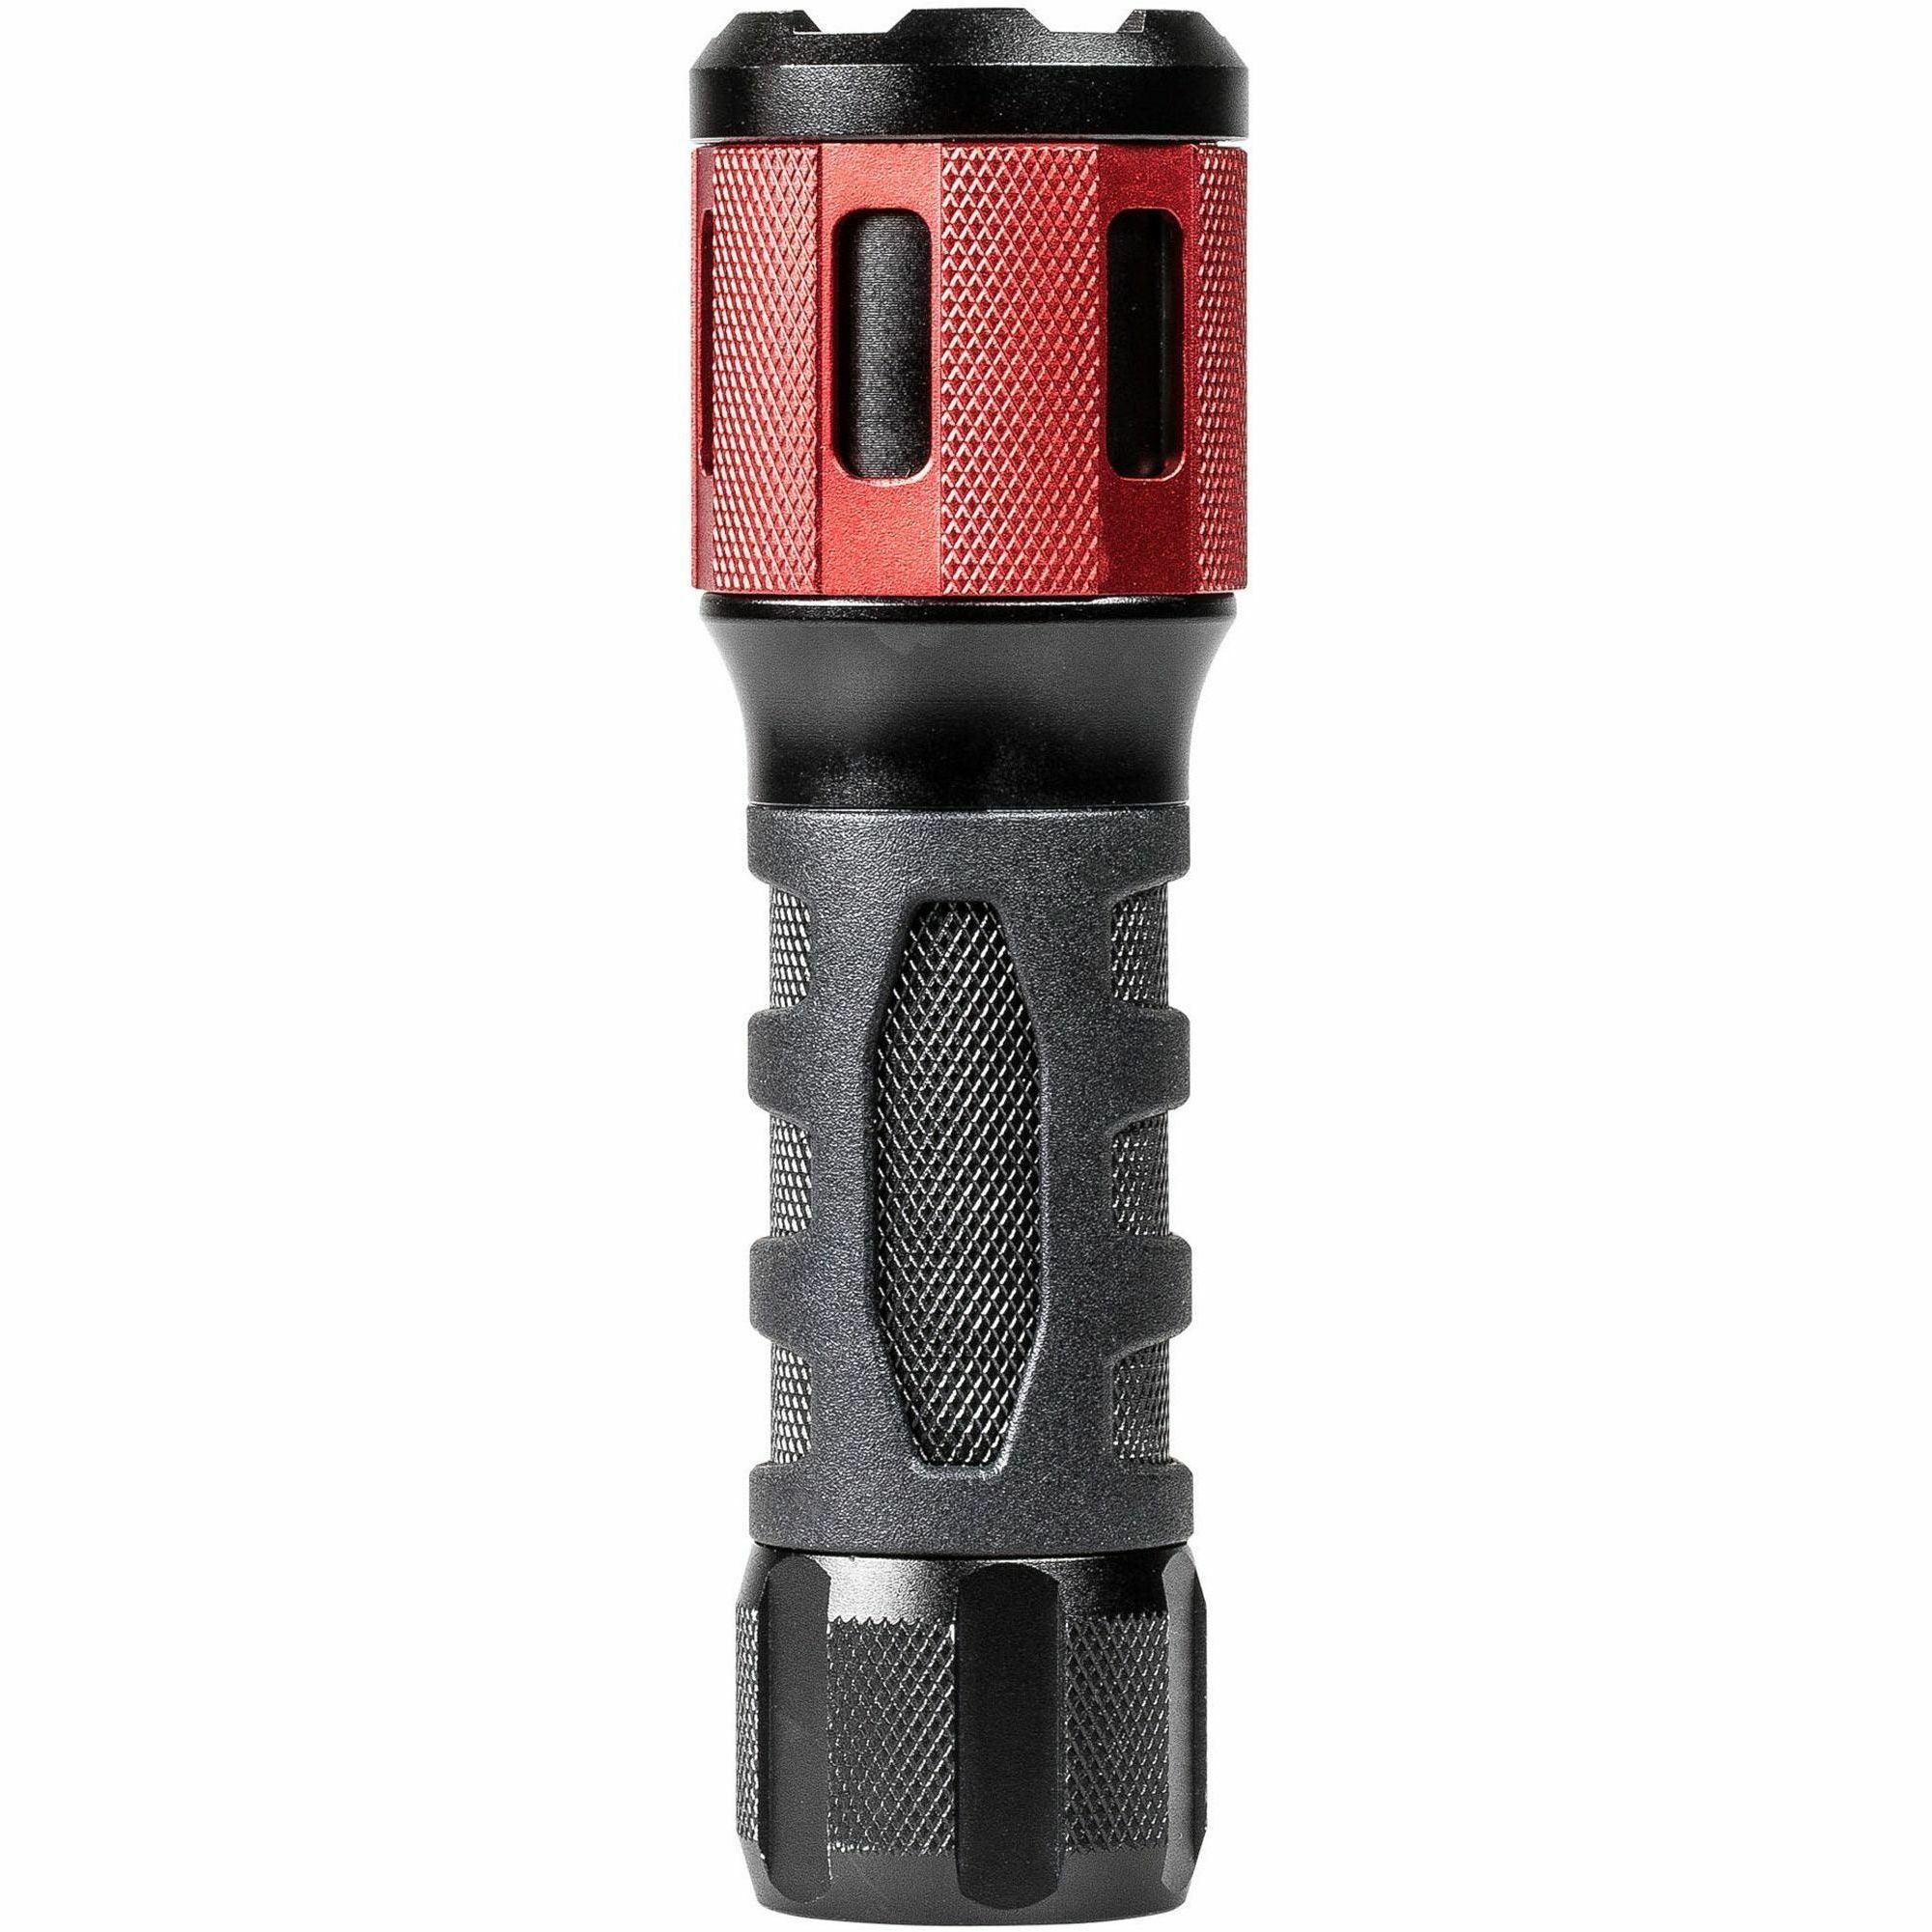 Dorcy Ultra HD Series Twist Flashlight - 360 lm Lumen - 3 x AAA - Battery - Impact Resistant - Black, Red - 3